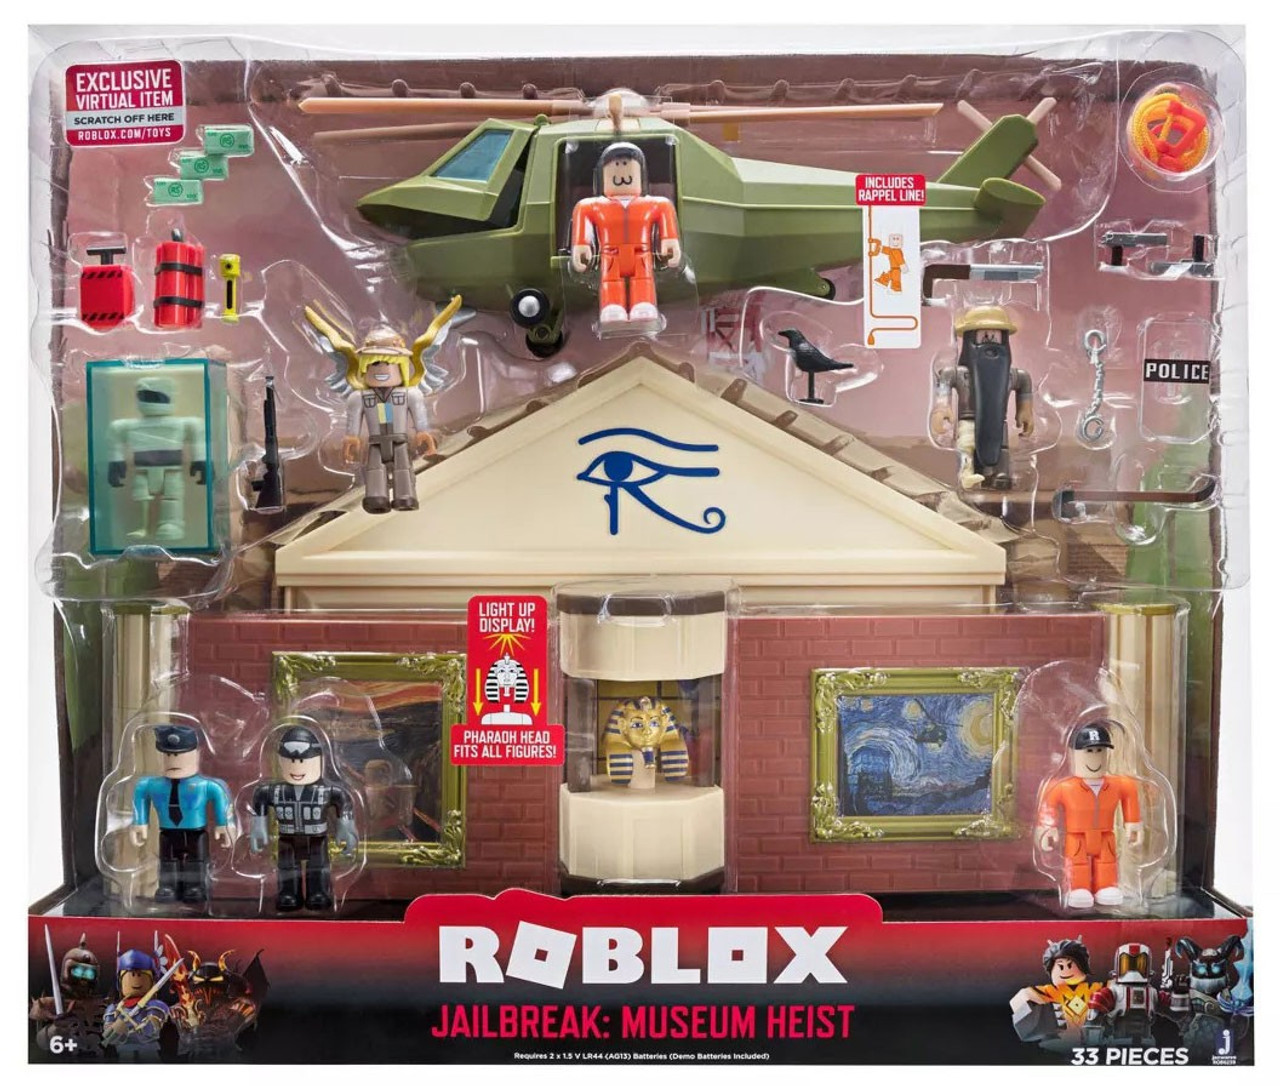 Jailbreak Roblox Toys Museum Geeksn0w - 